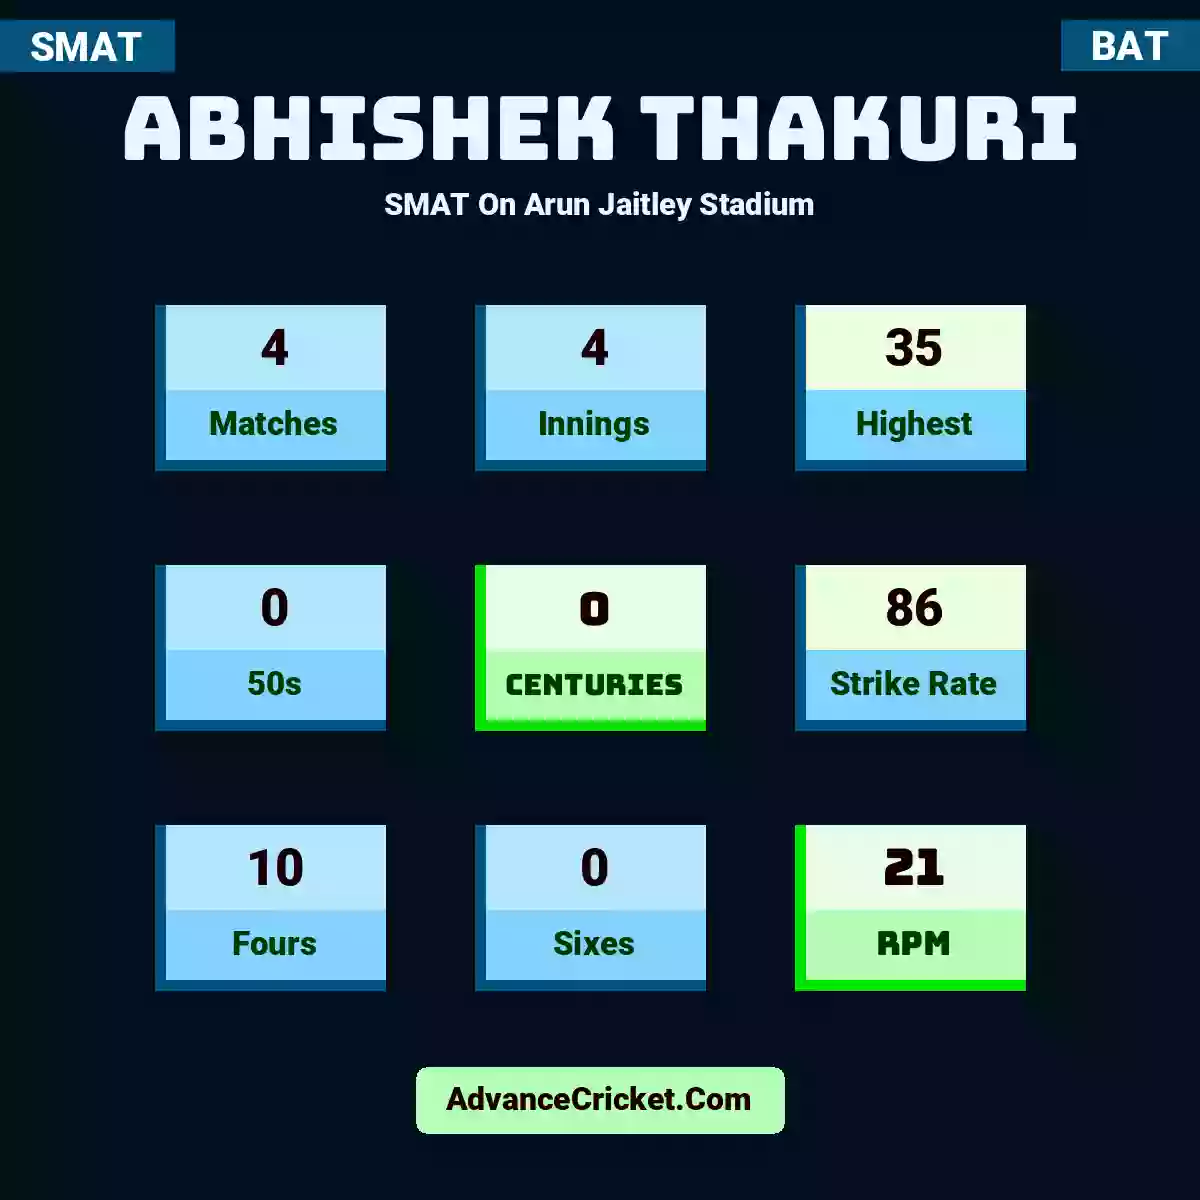 Abhishek Thakuri SMAT  On Arun Jaitley Stadium, Abhishek Thakuri played 4 matches, scored 35 runs as highest, 0 half-centuries, and 0 centuries, with a strike rate of 86. A.Thakuri hit 10 fours and 0 sixes, with an RPM of 21.